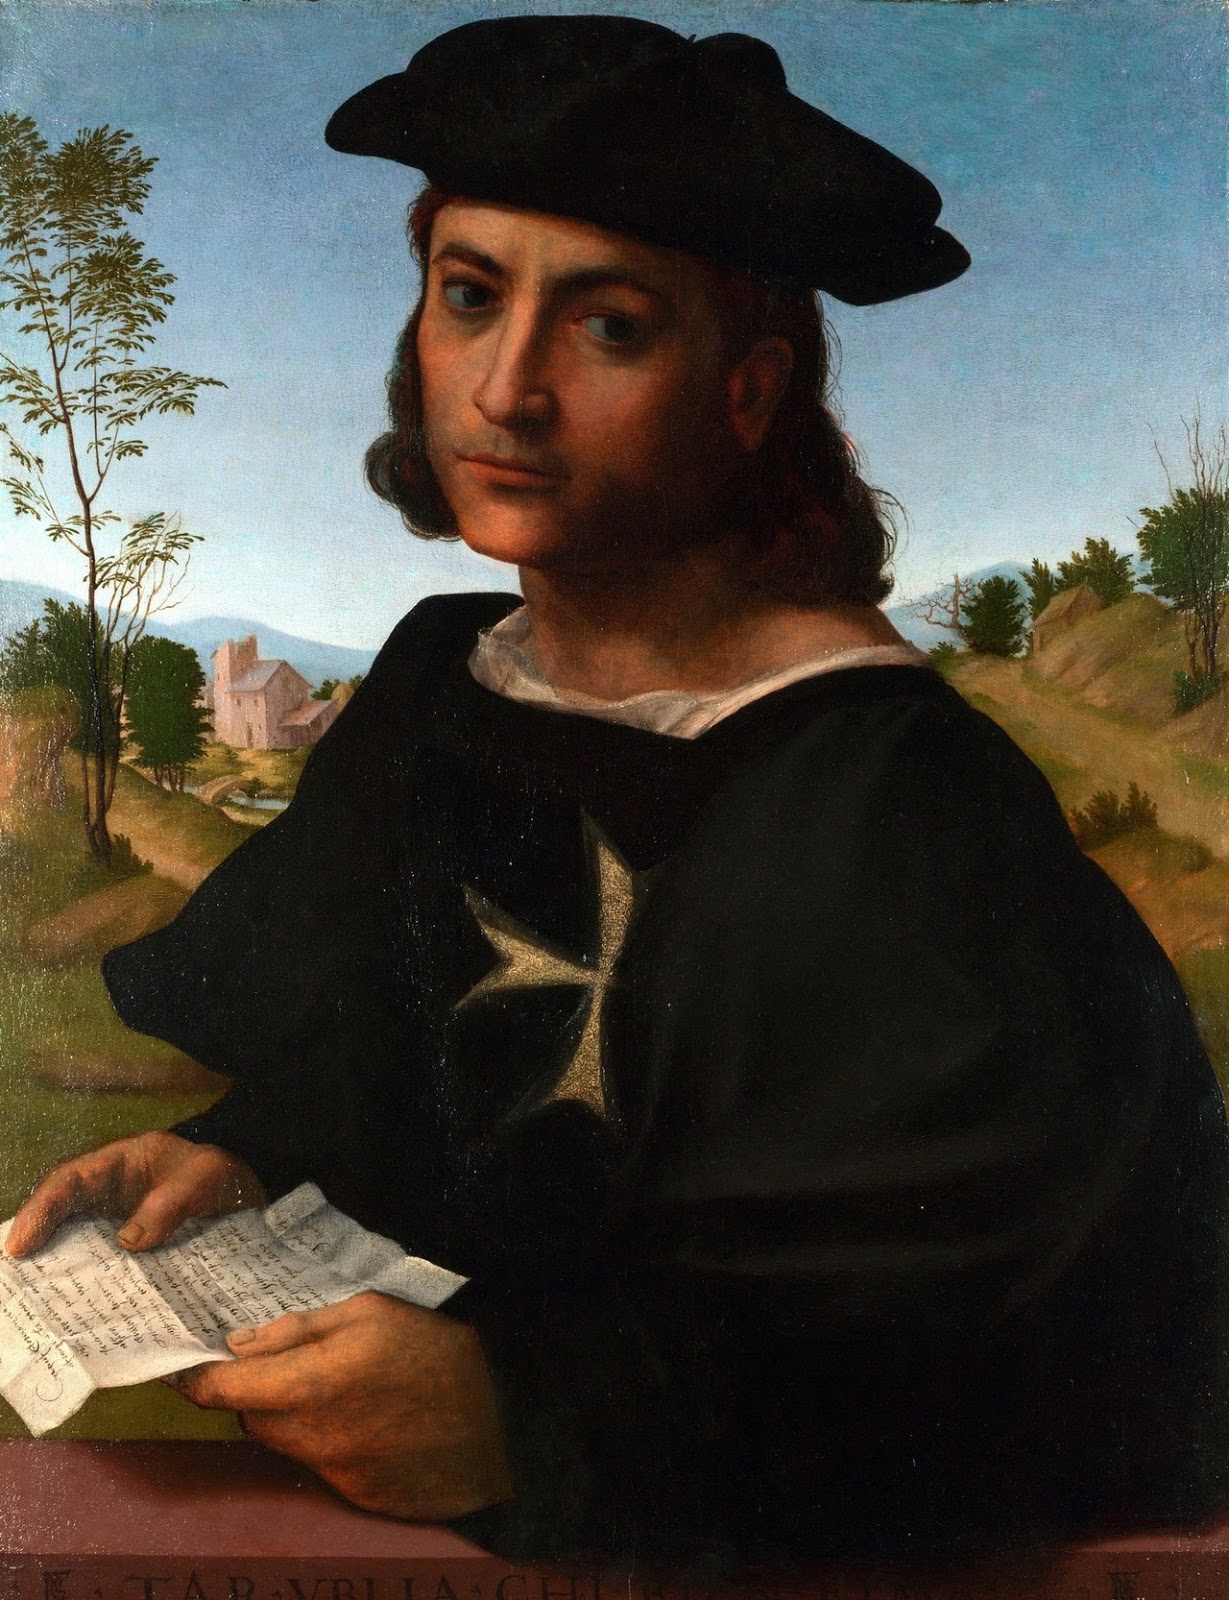 Franciabigio-1482-1525 (22).jpg